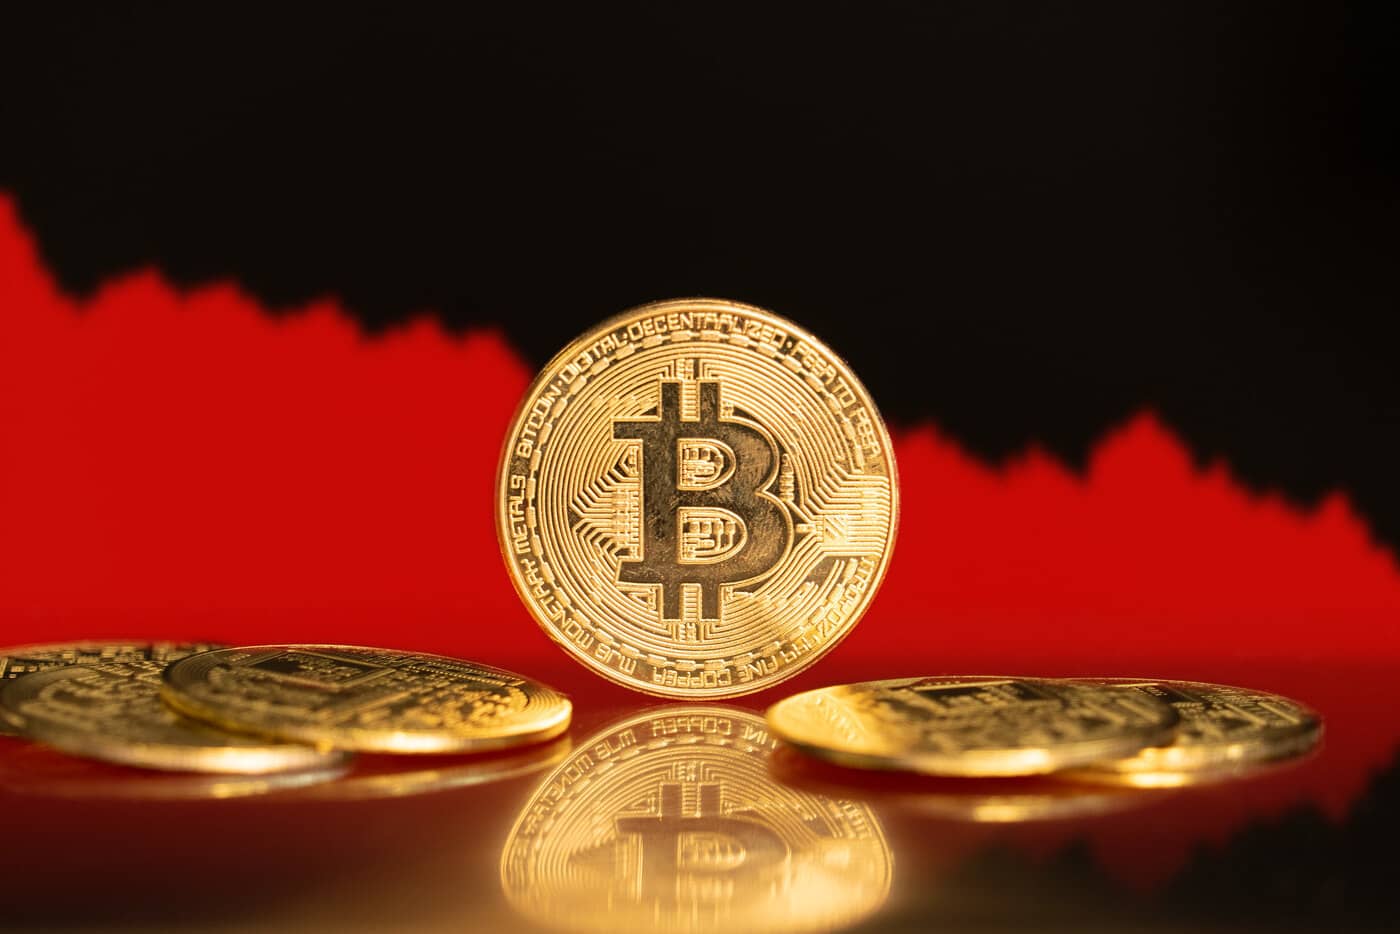 BlackRock’s Bitcoin ETF Inflows Fall to Zero, BTC Drops